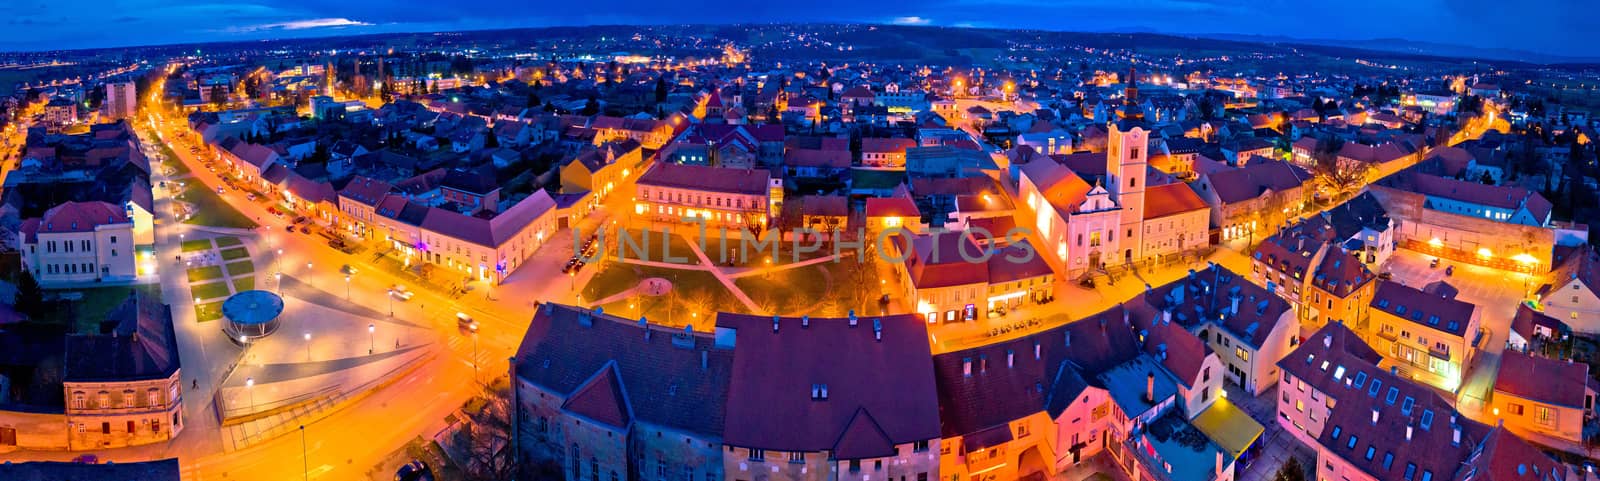 Town of Krizevci aerial panoramic night view, Prigorje region of Croatia